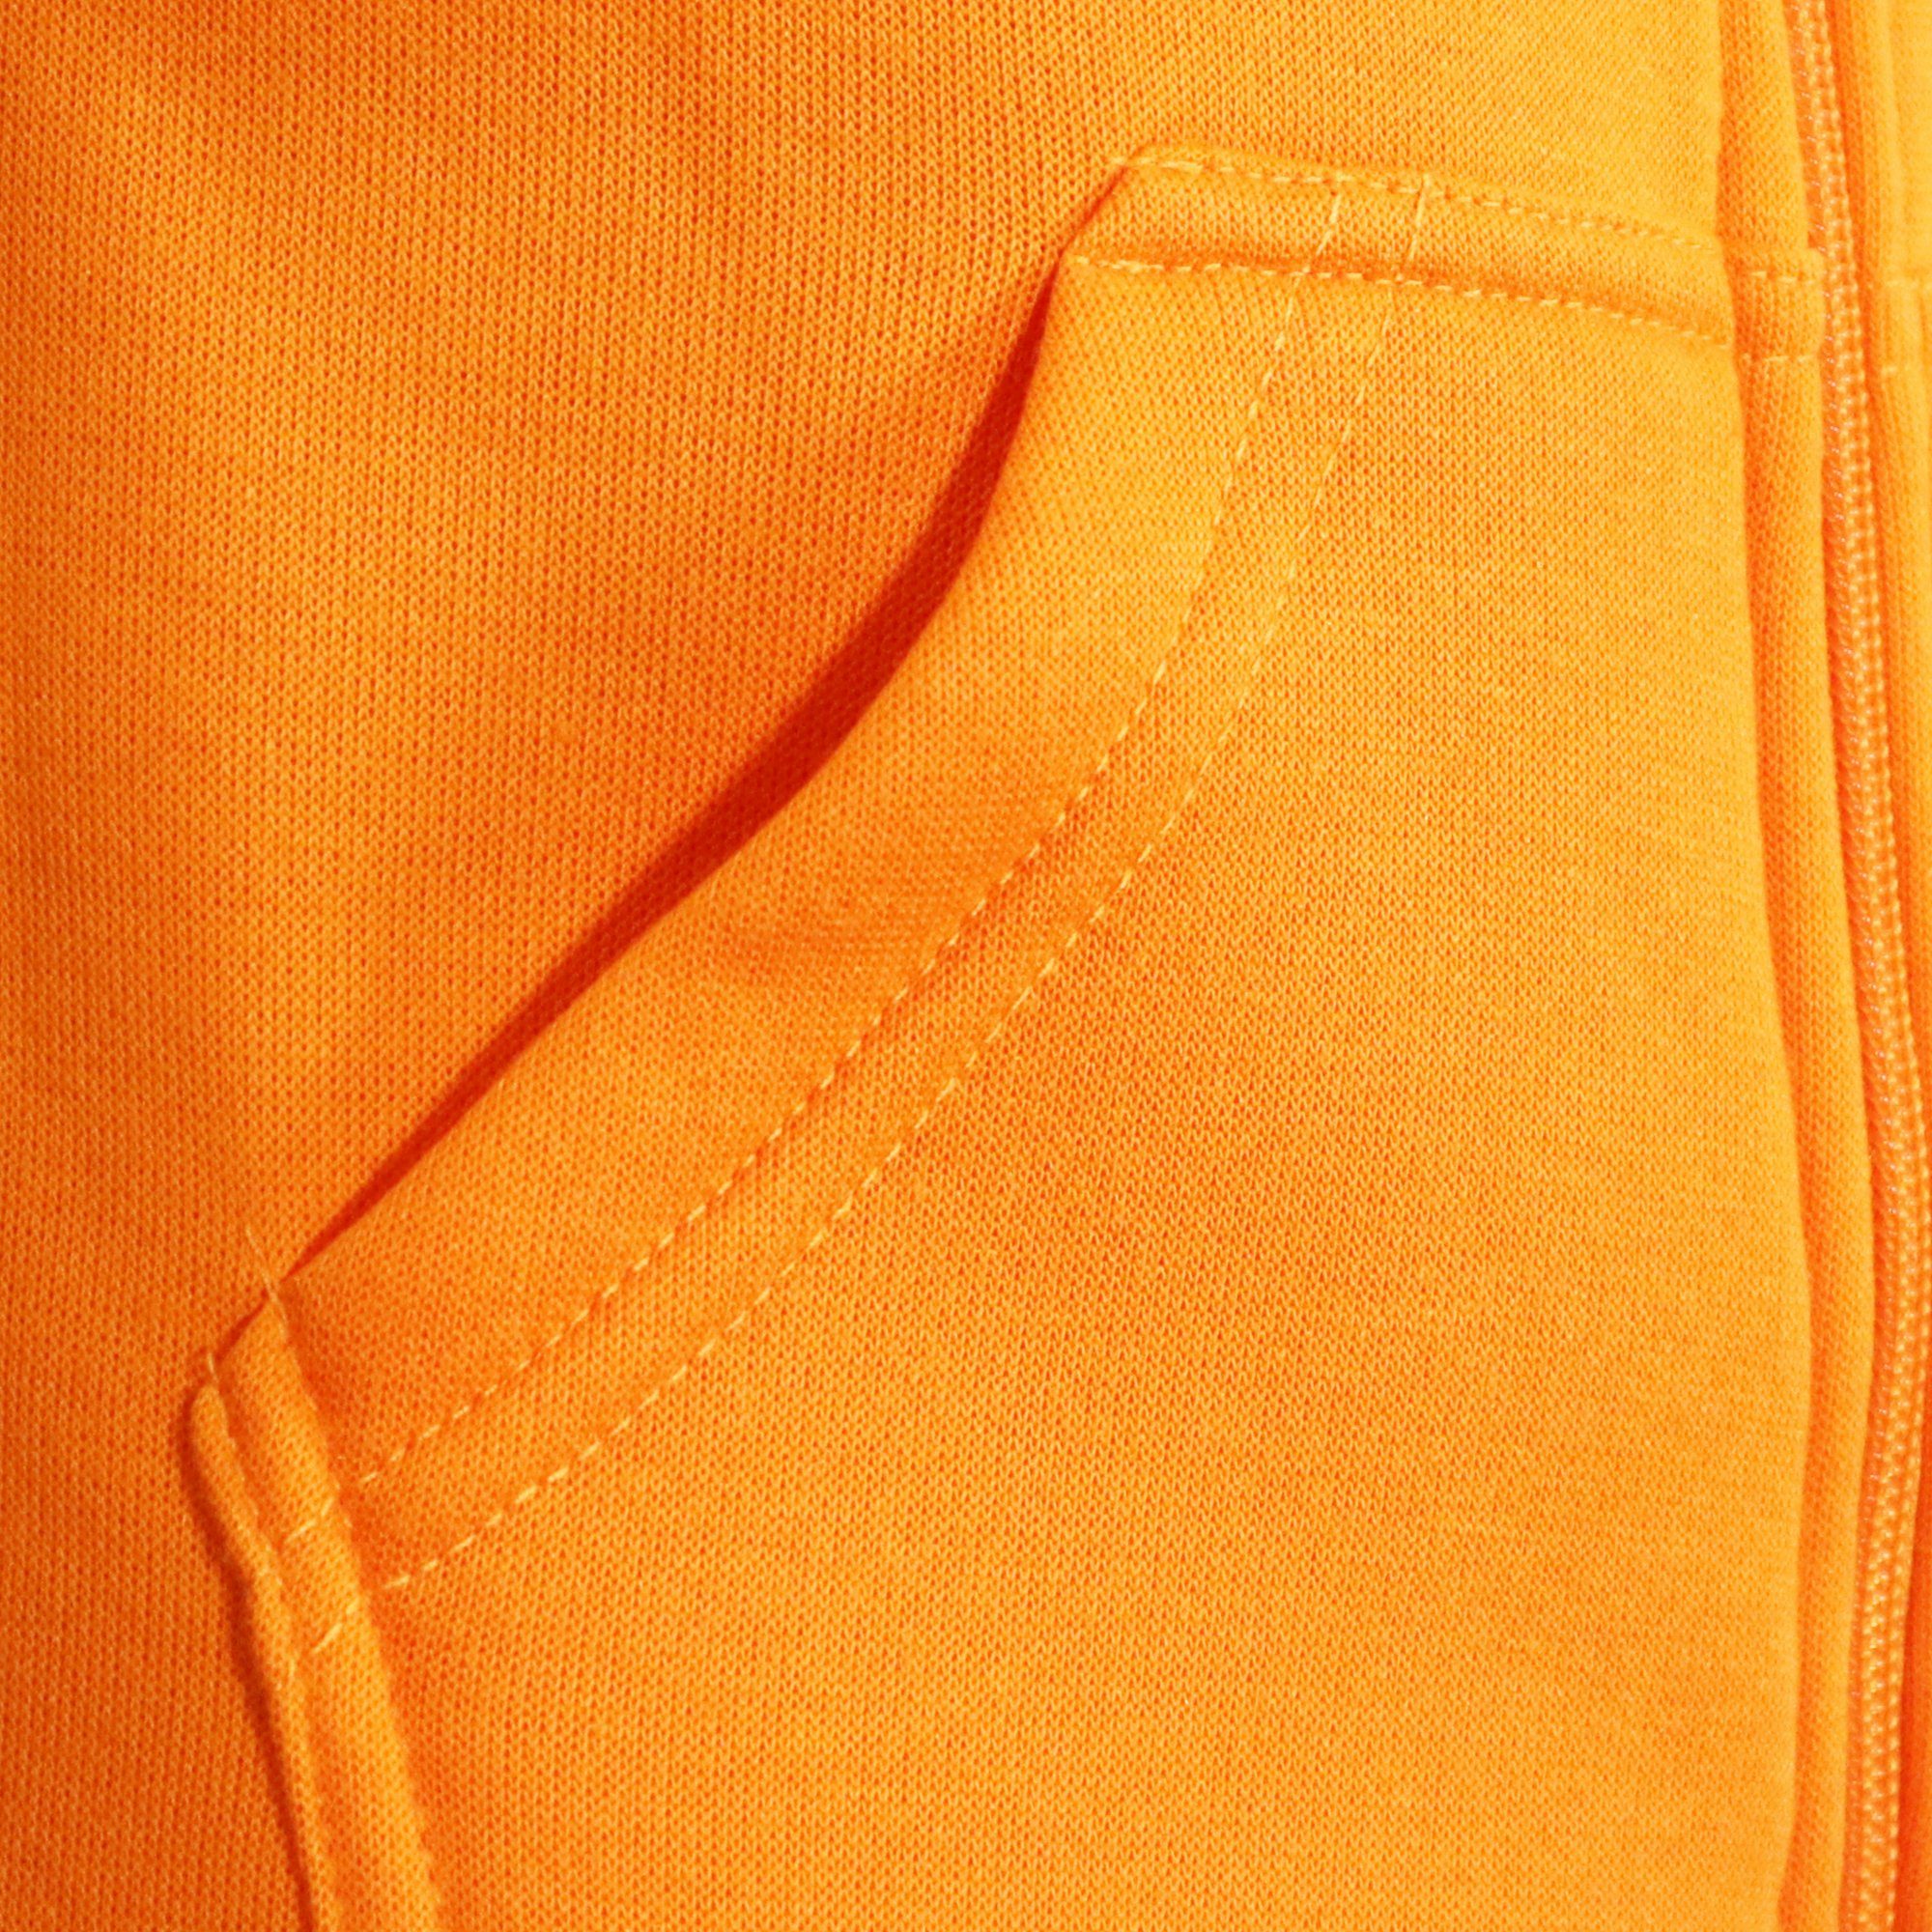 Naruto Jogginganzug Naruto Shippuden Joggingset 98 Hose Jacke, bis 140 Orange Sweater Gr. Sporthose